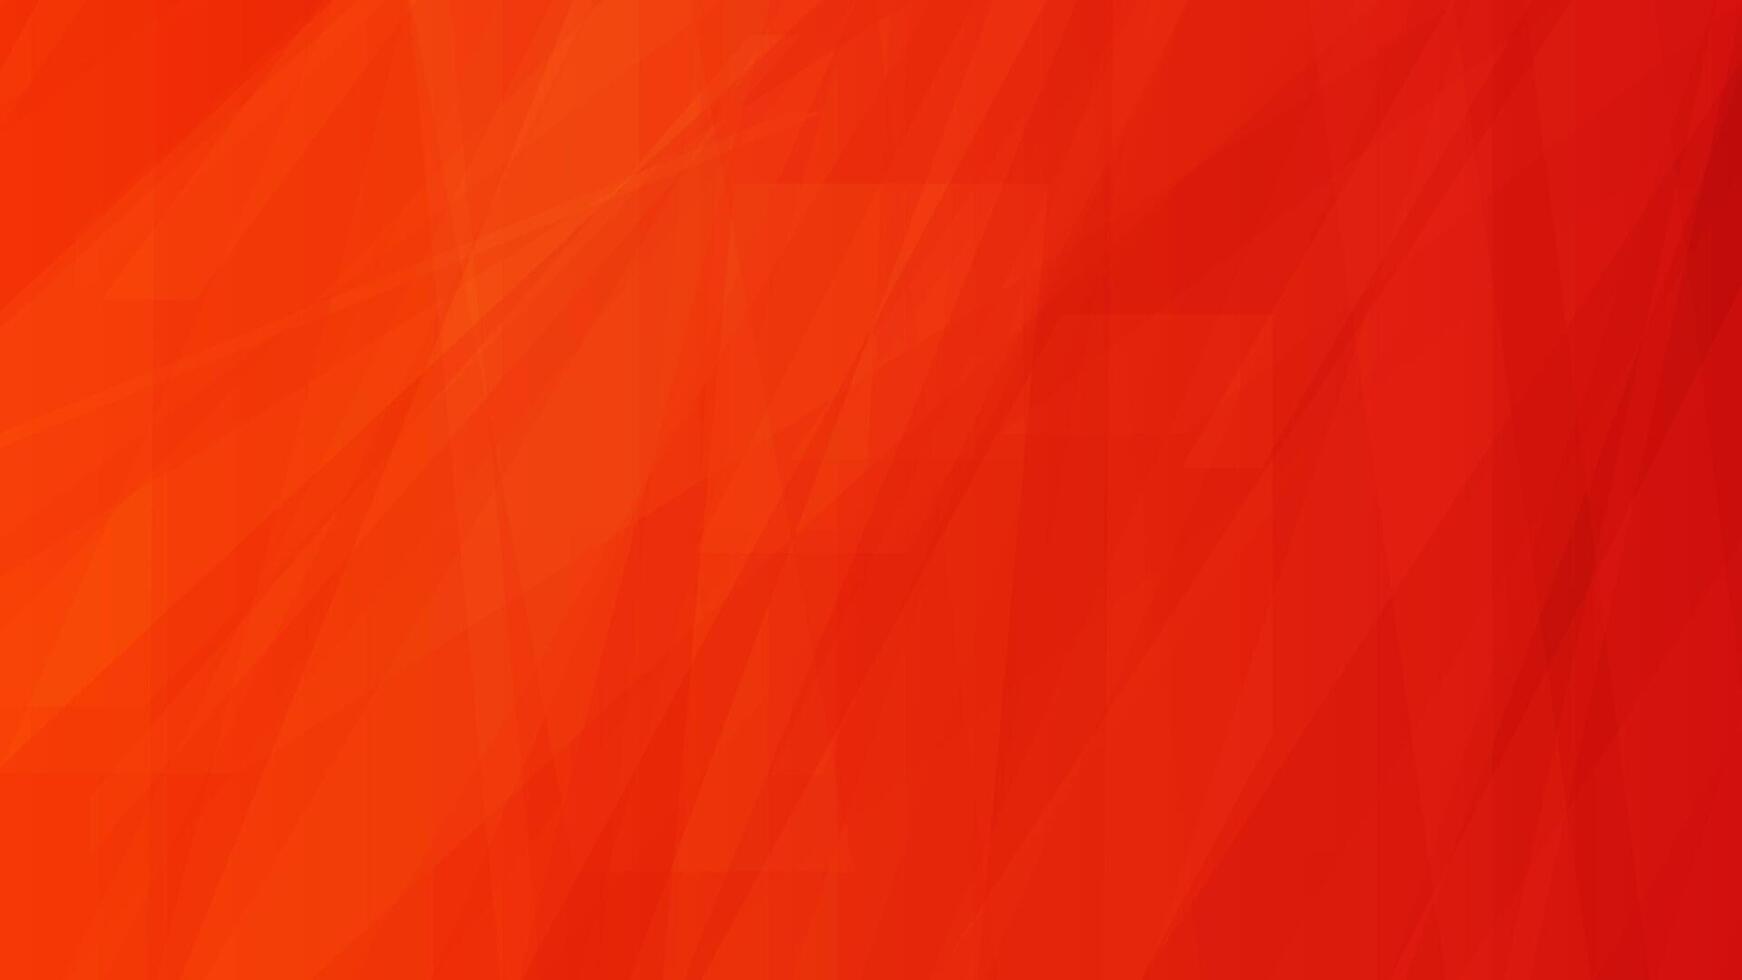 moderno vistoso degradado antecedentes con líneas. naranja geométrico resumen presentación fondo. vector ilustración